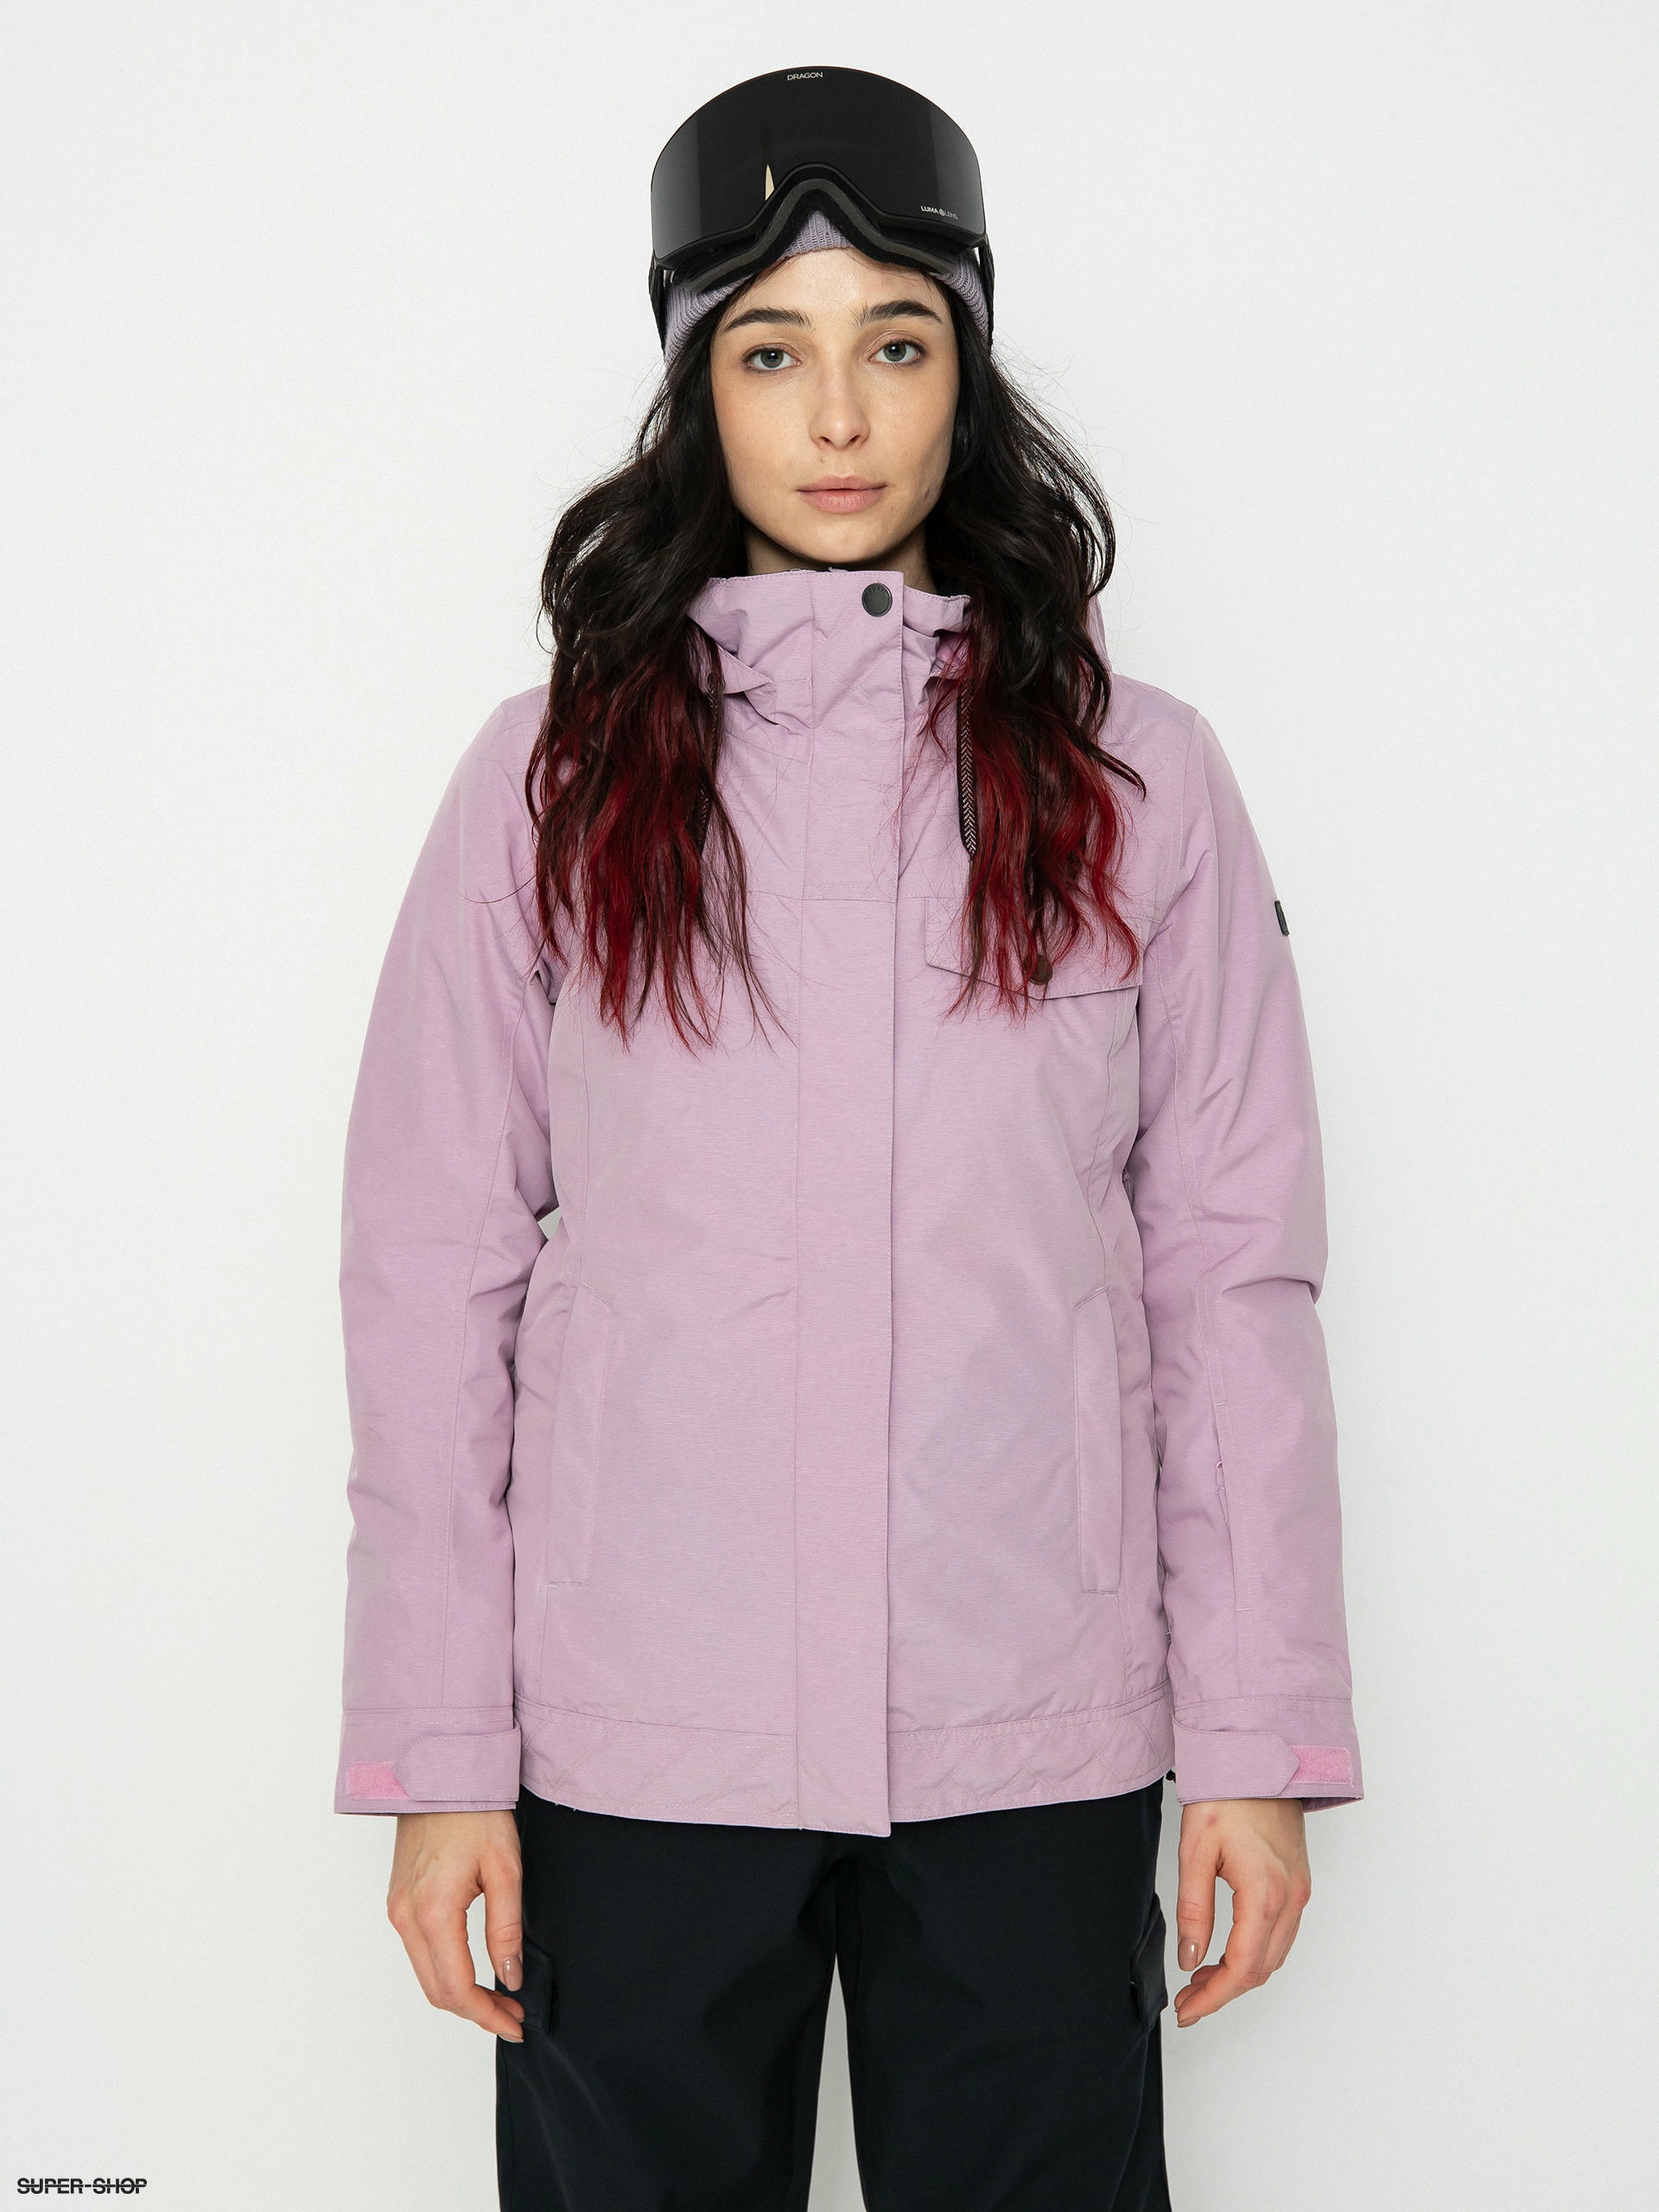 https://static.super-shop.com/1443409-roxy-billie-snowboard-jacket-wmn-pink-frosting.jpg?w=1920